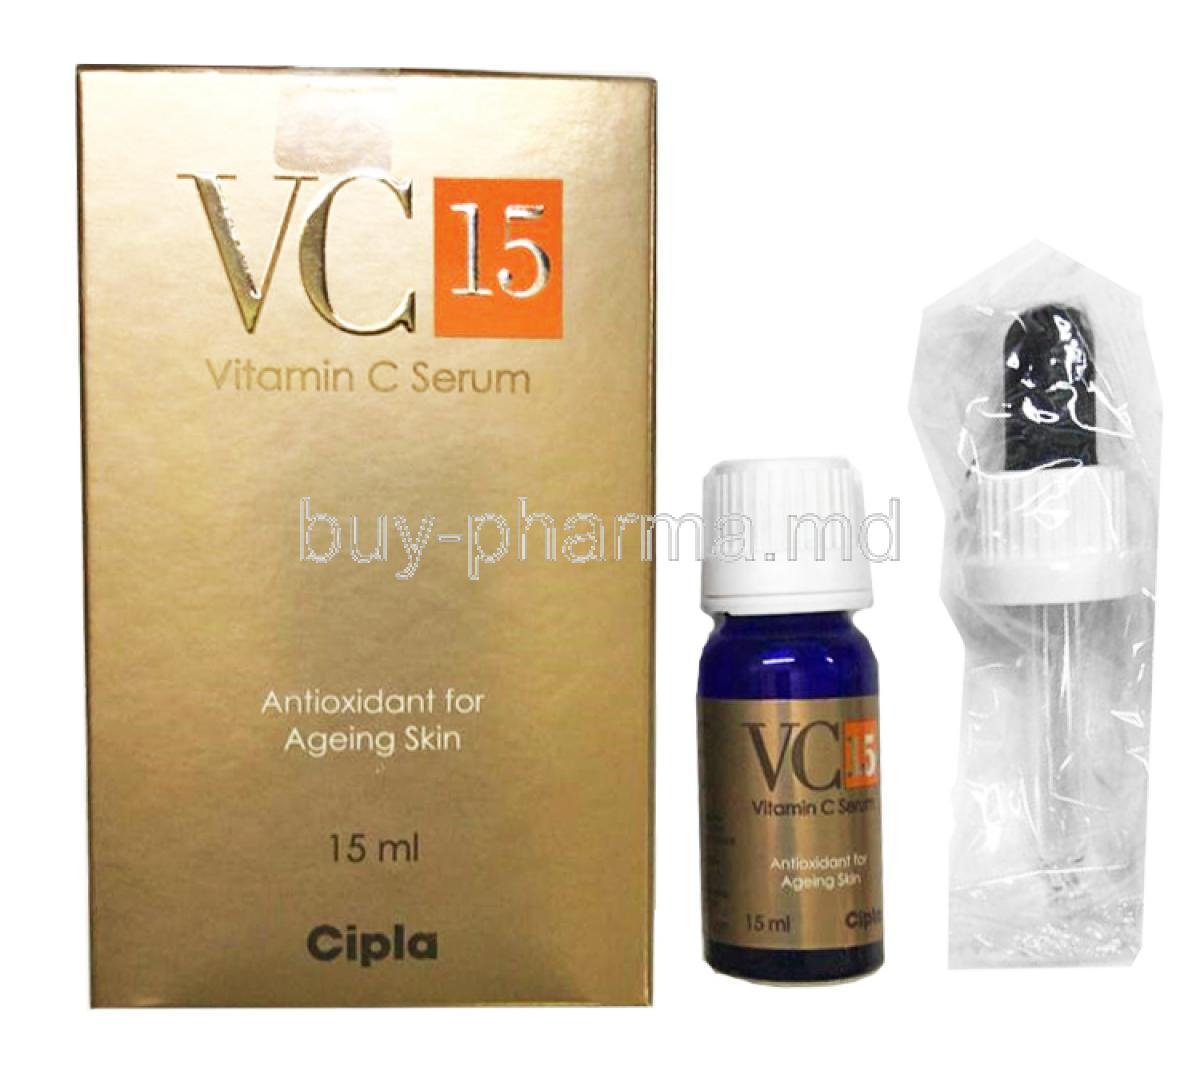 VC 15 Serum, Vitamin C box and bottle